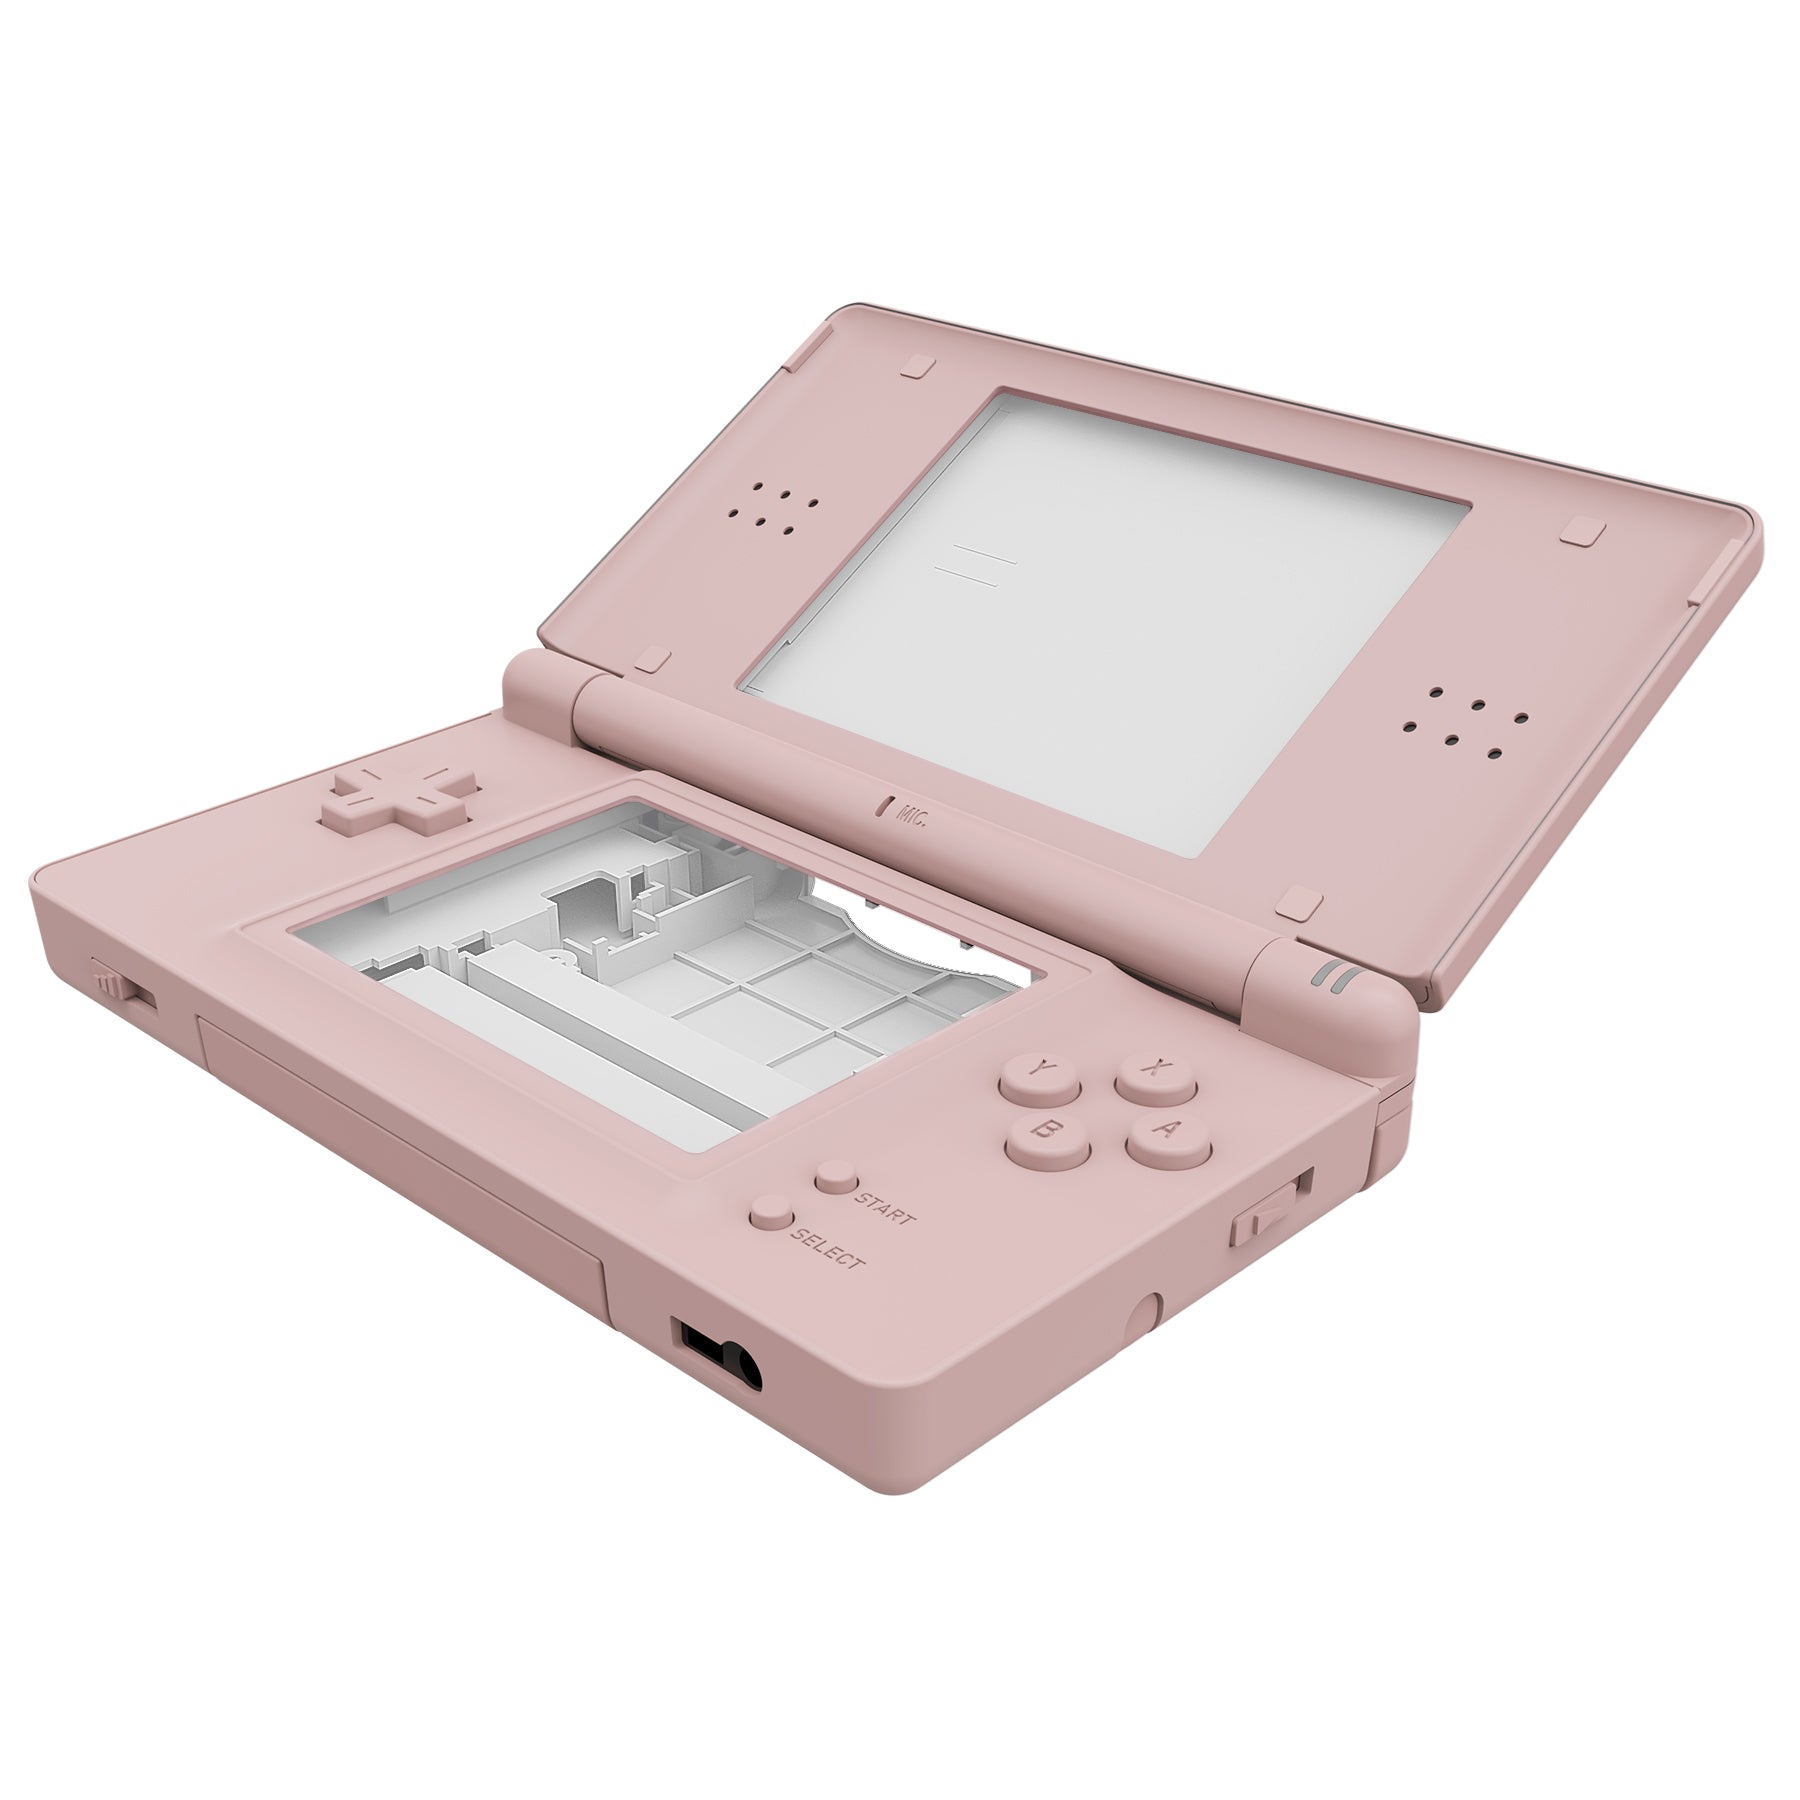 Nintendo DSlite USG-001 ピンク 電源確認のみ - Nintendo Switch